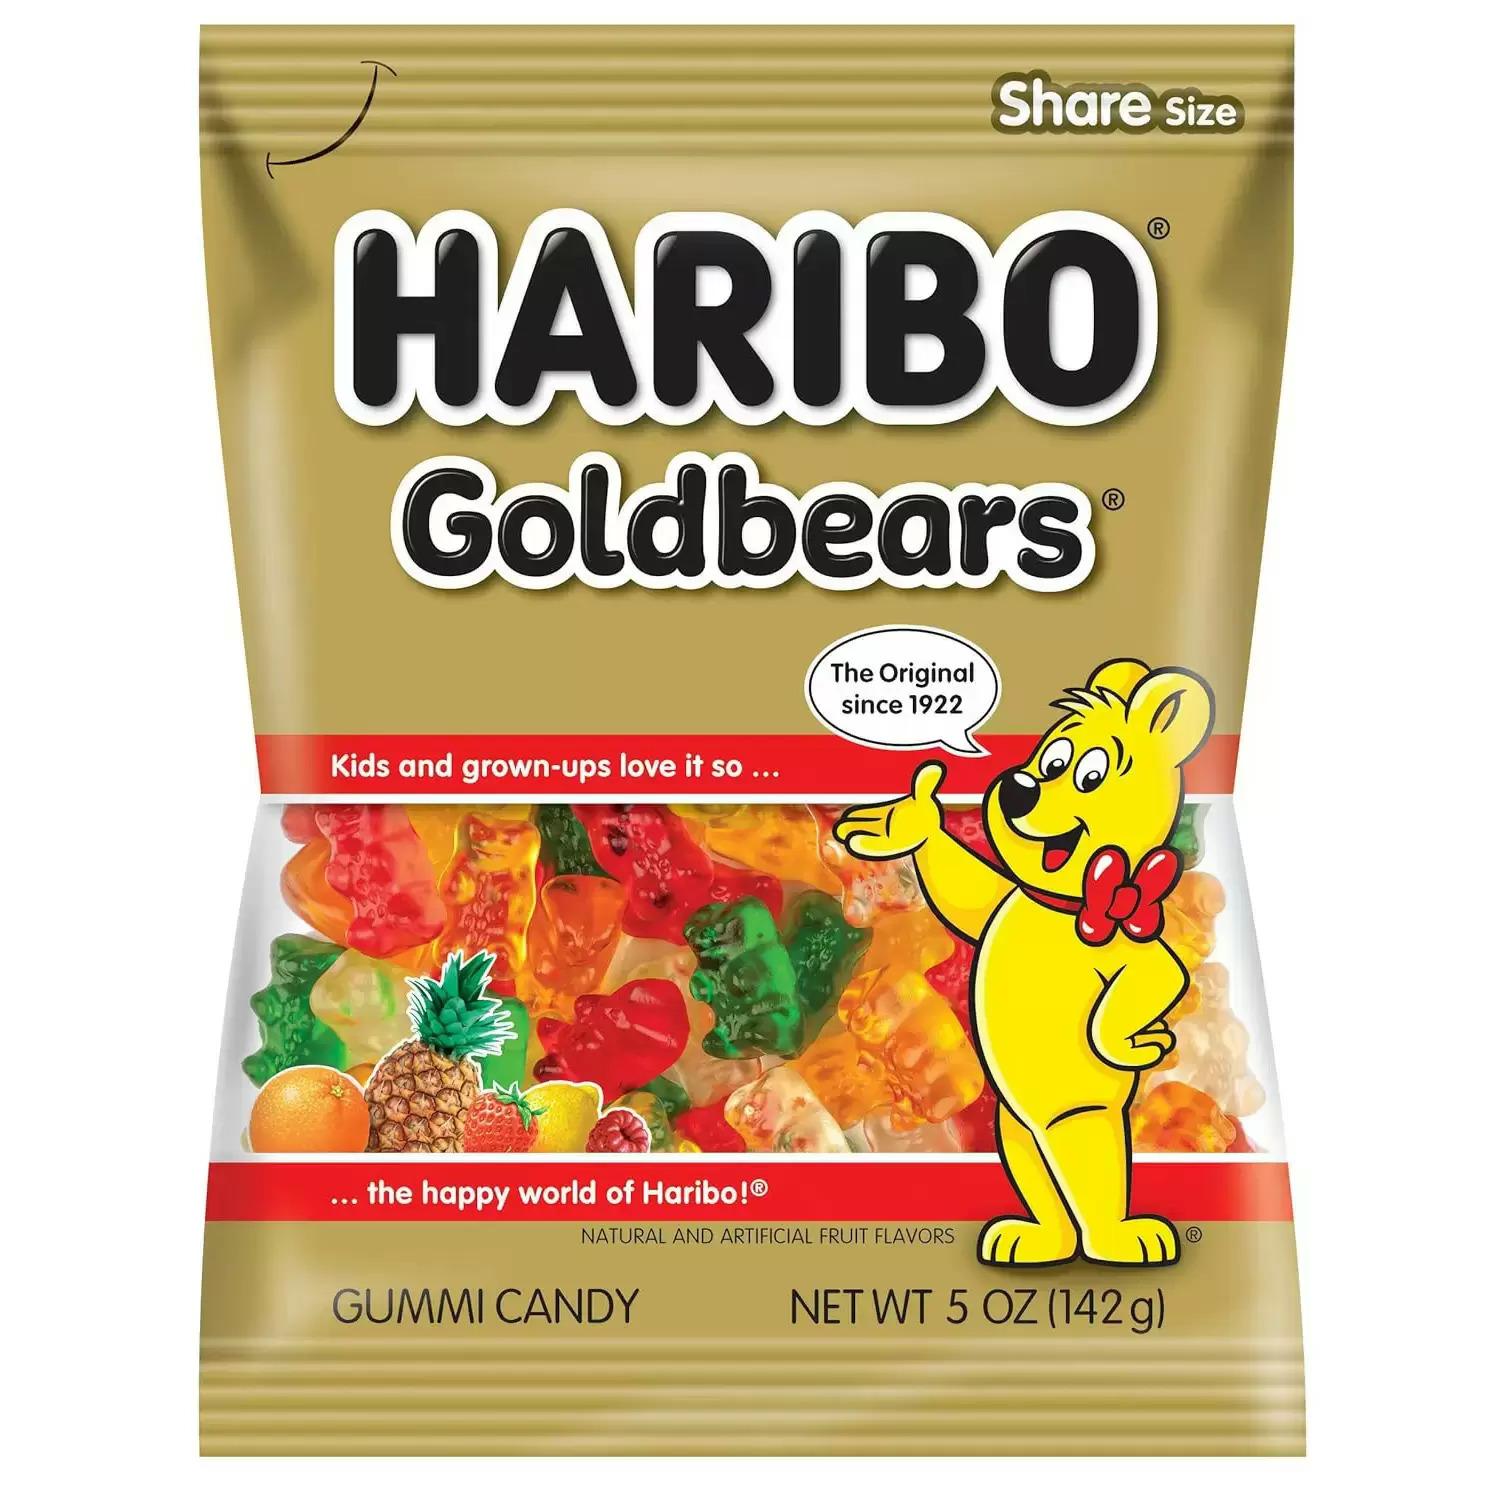 Haribo Goldbears Gummi Bear Candy 12 Pack for $8.99